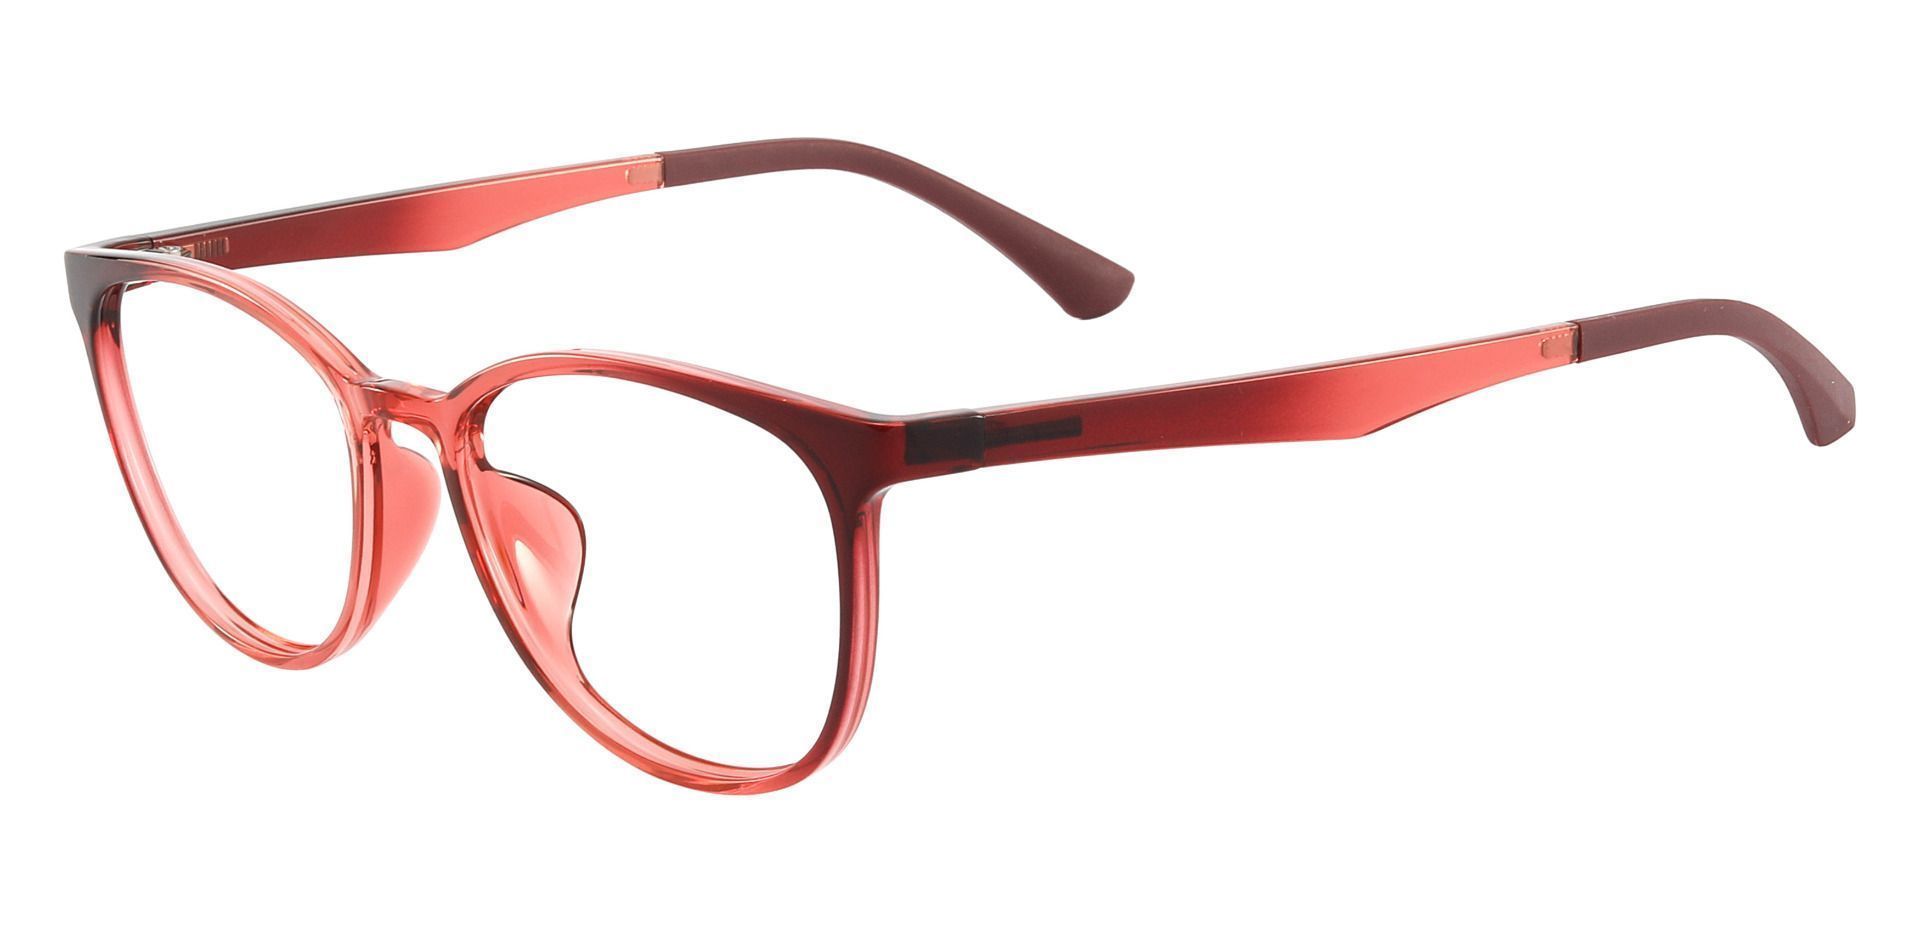 Pembroke Oval Non-Rx Glasses - Pink